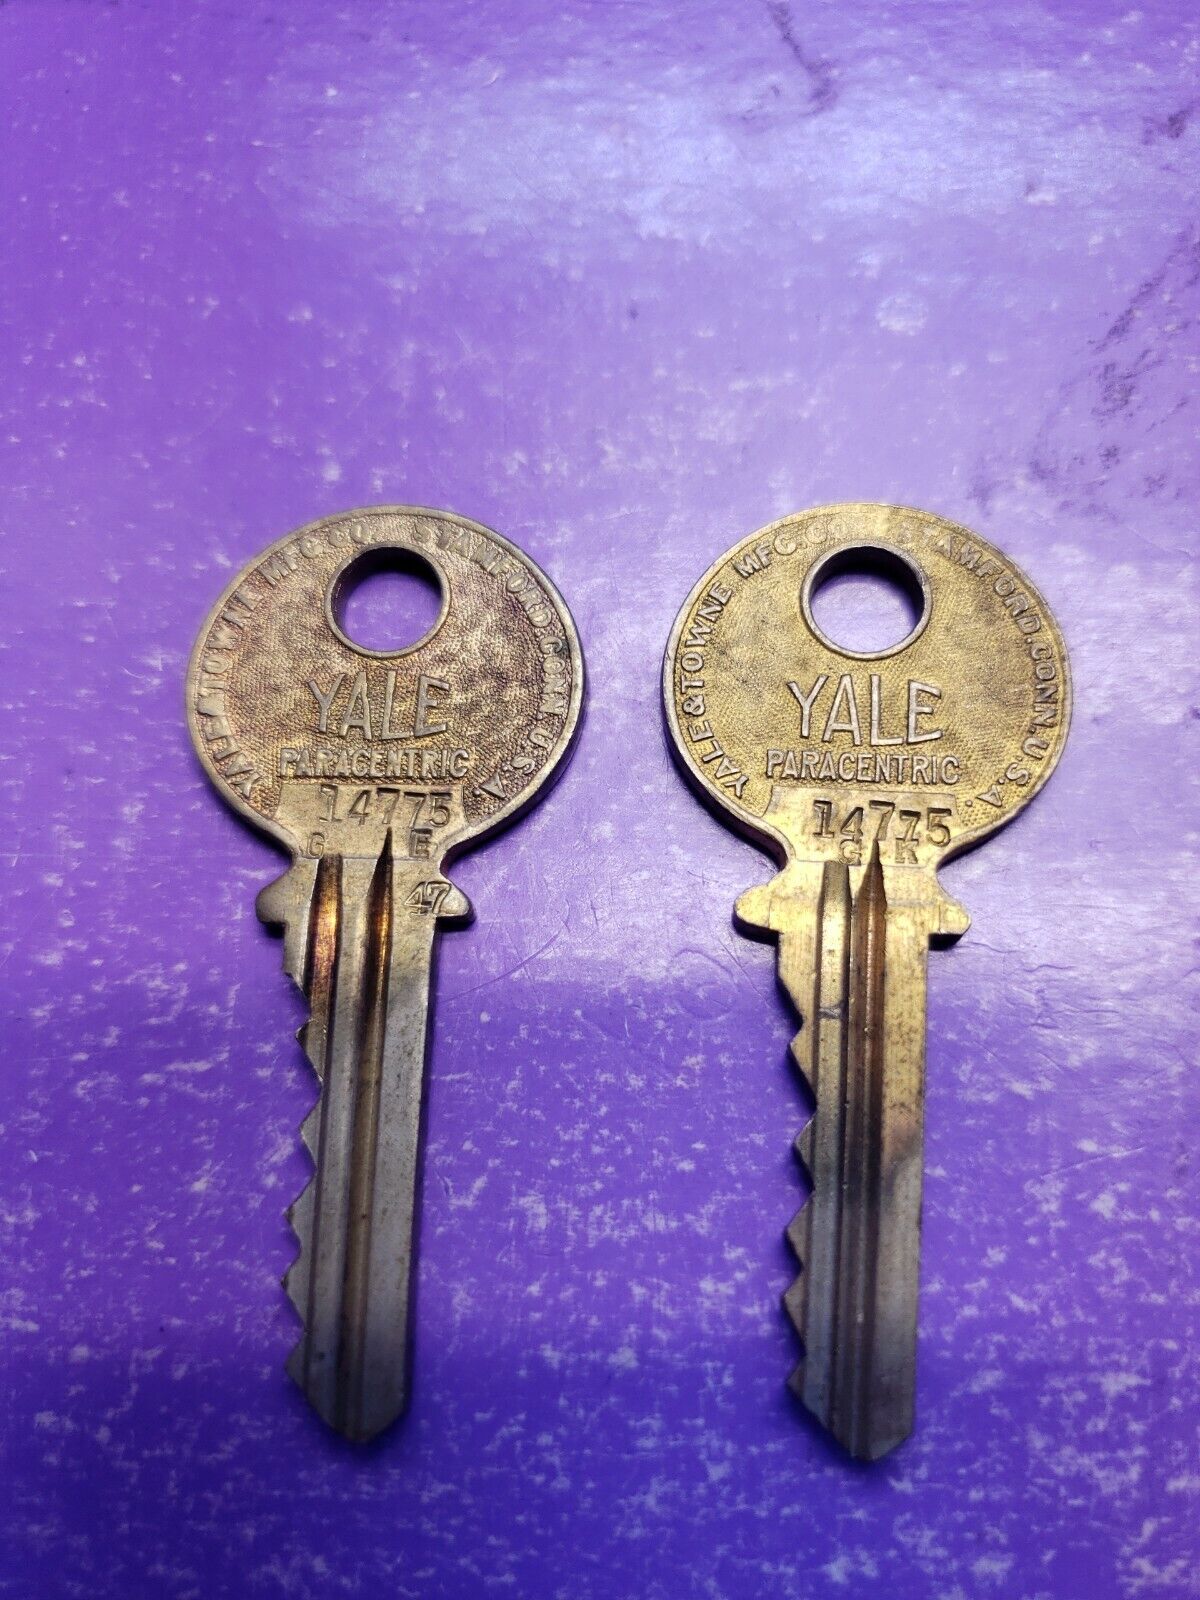 2 MATCHING Yale keyed ORIGINAL PARACENTRIC SECURITY KEYS  GE47 #14775  